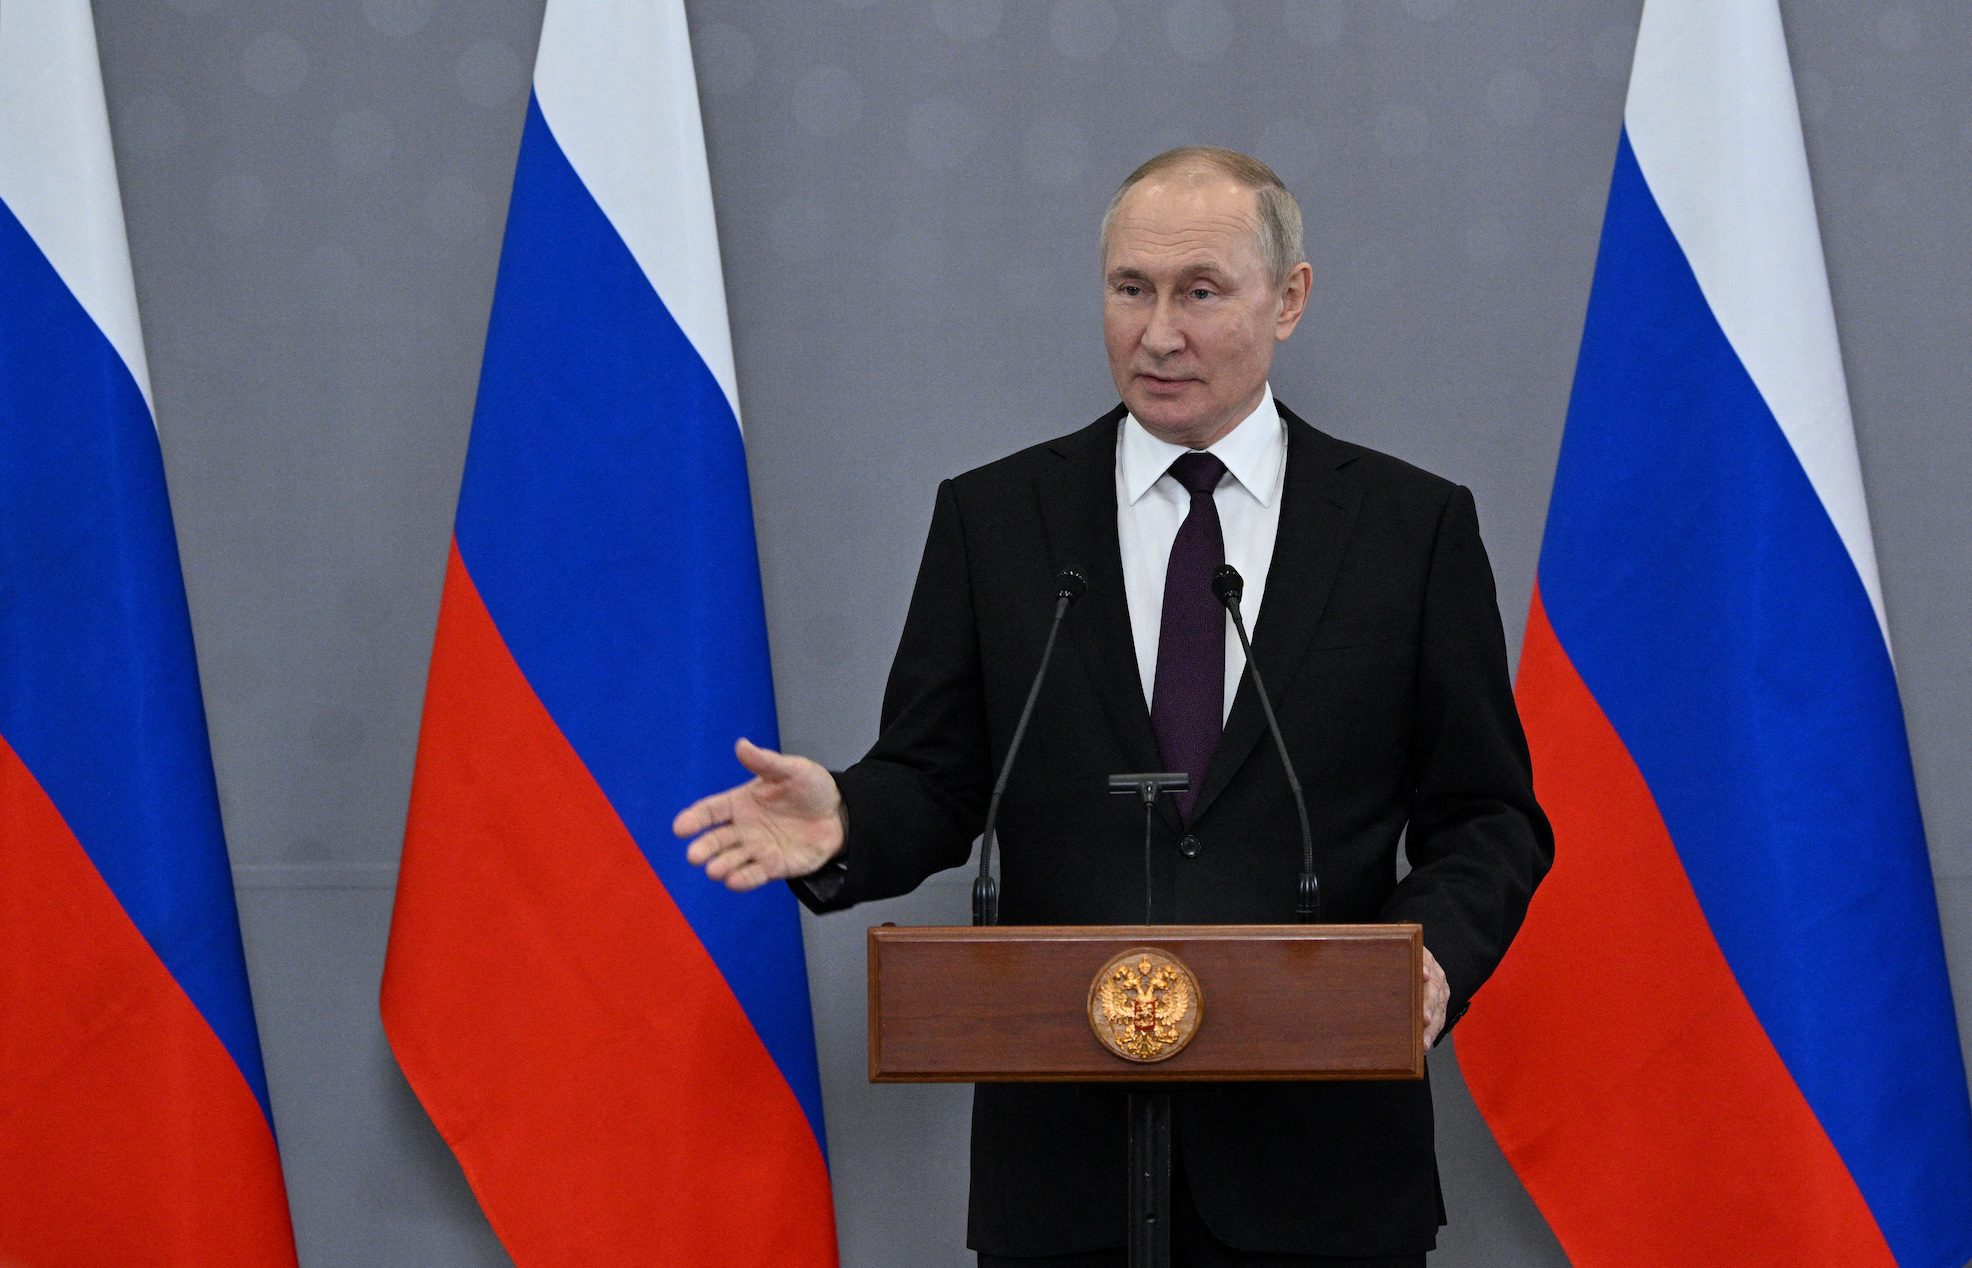 Putin speaks to Iranian president, with emphasis on deepening ties – Kremlin